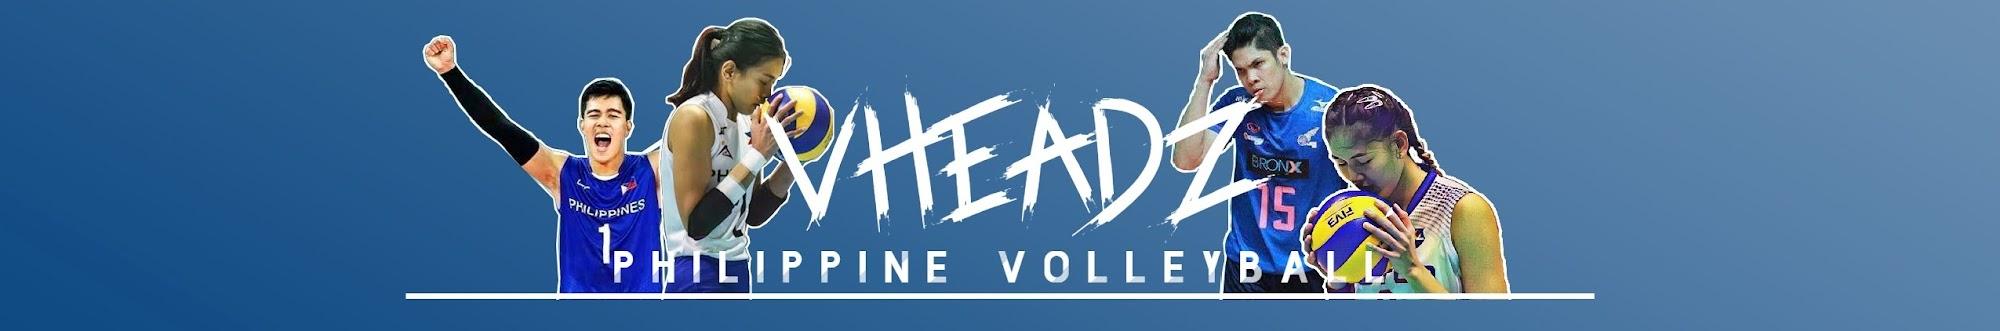 Vheadz Volleyball PH